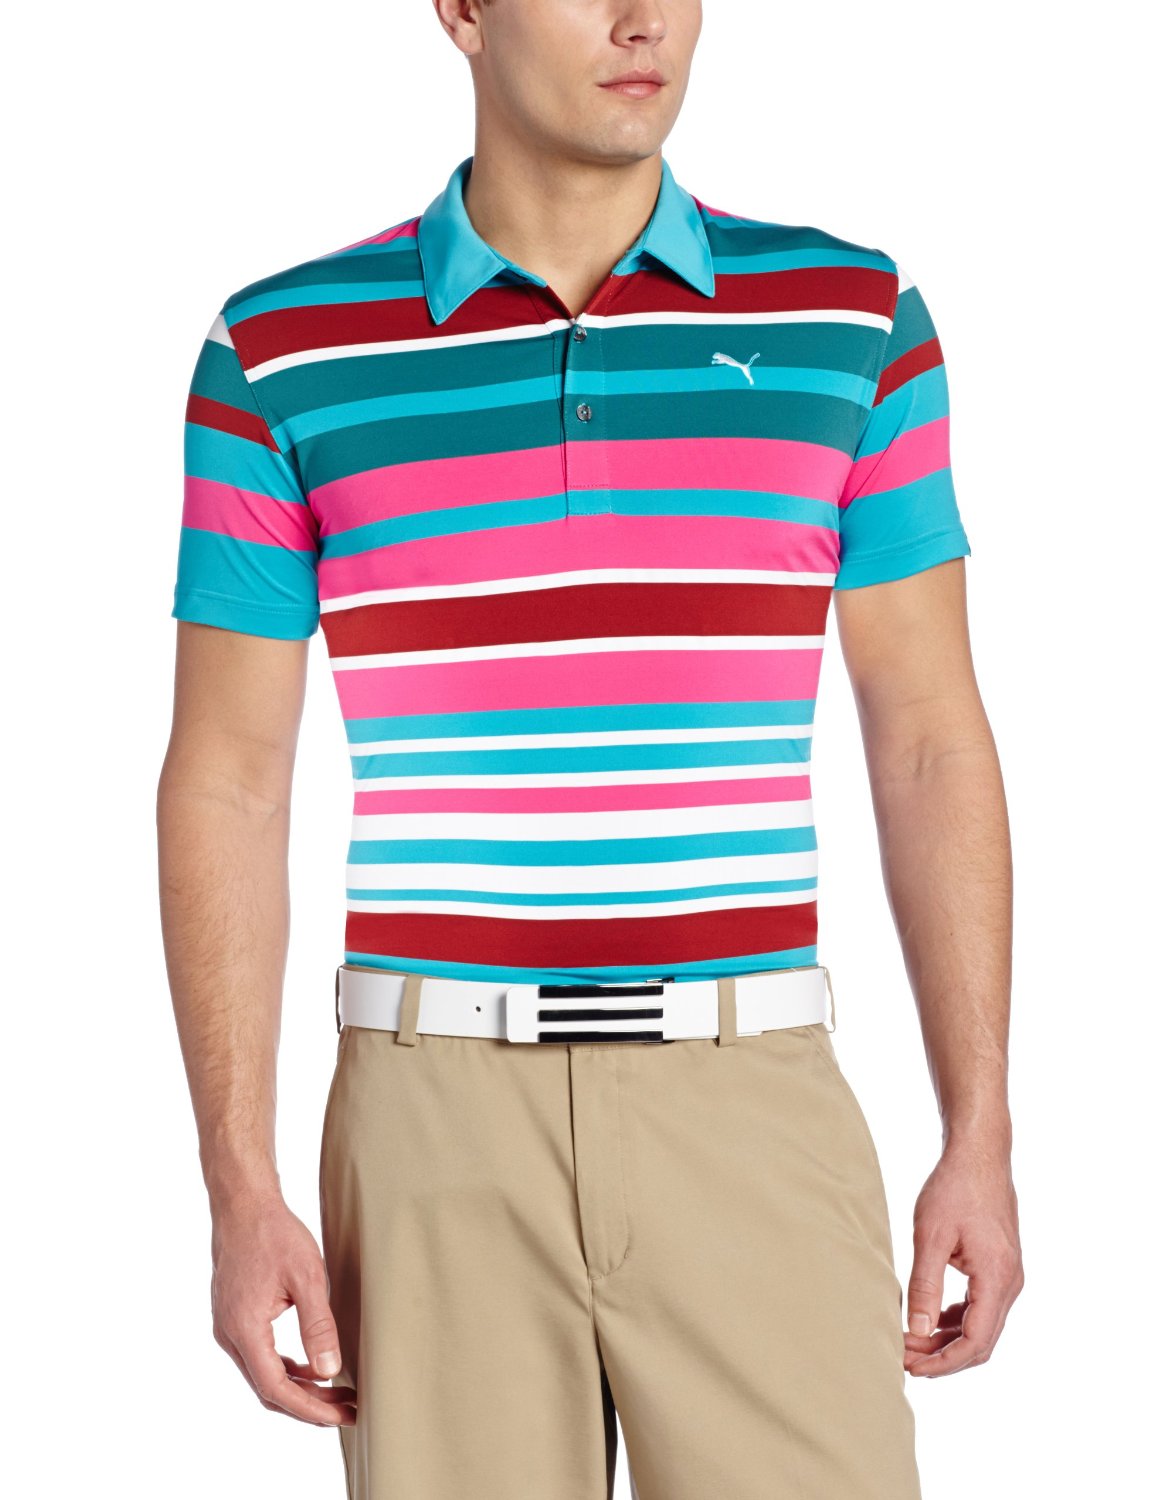 puma men's golf shirts